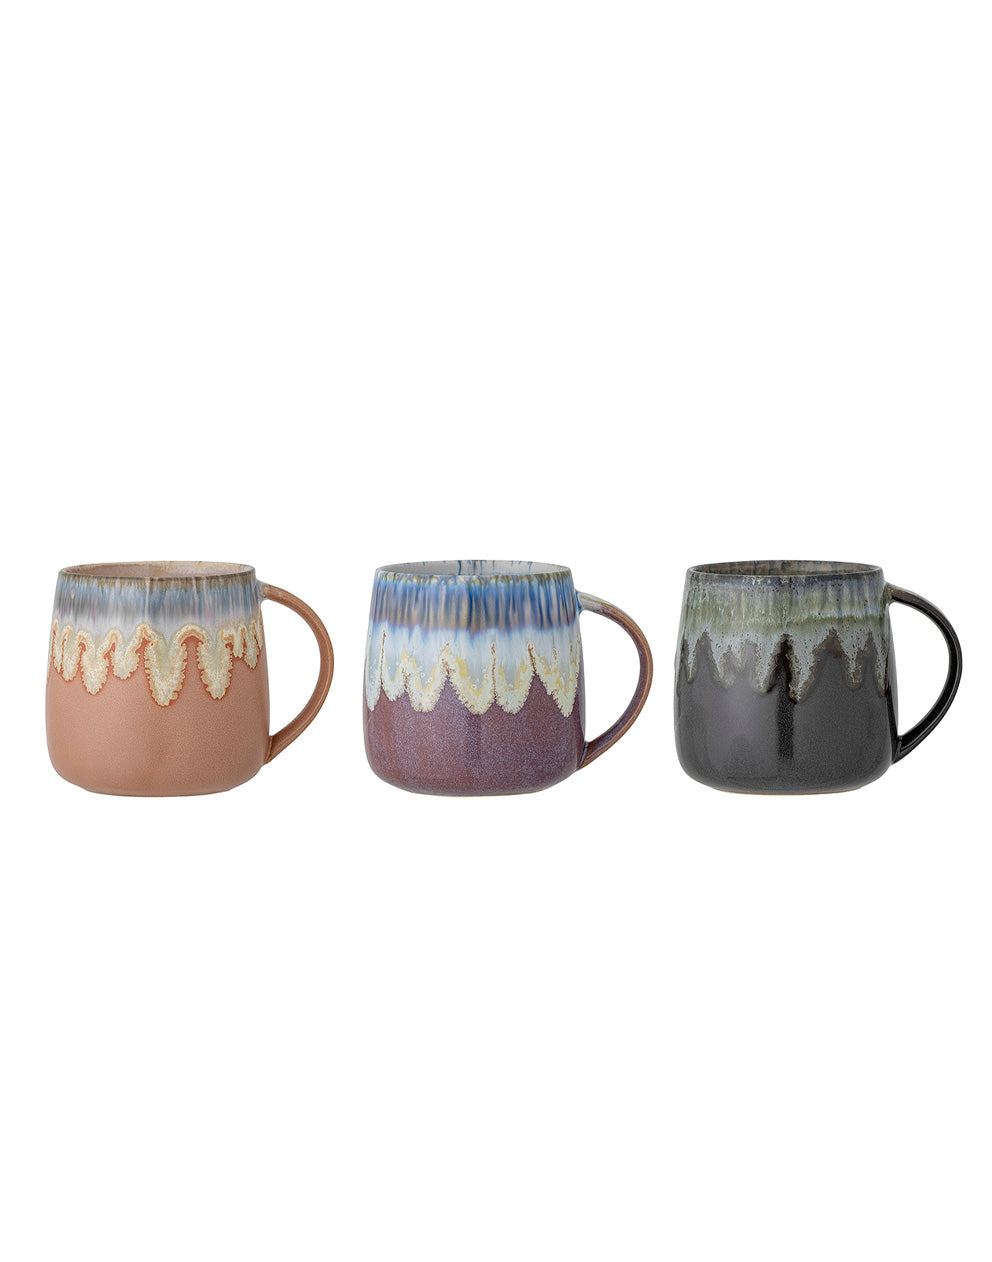 Large Stoneware Mugs in Terracotta, Grey & Purple